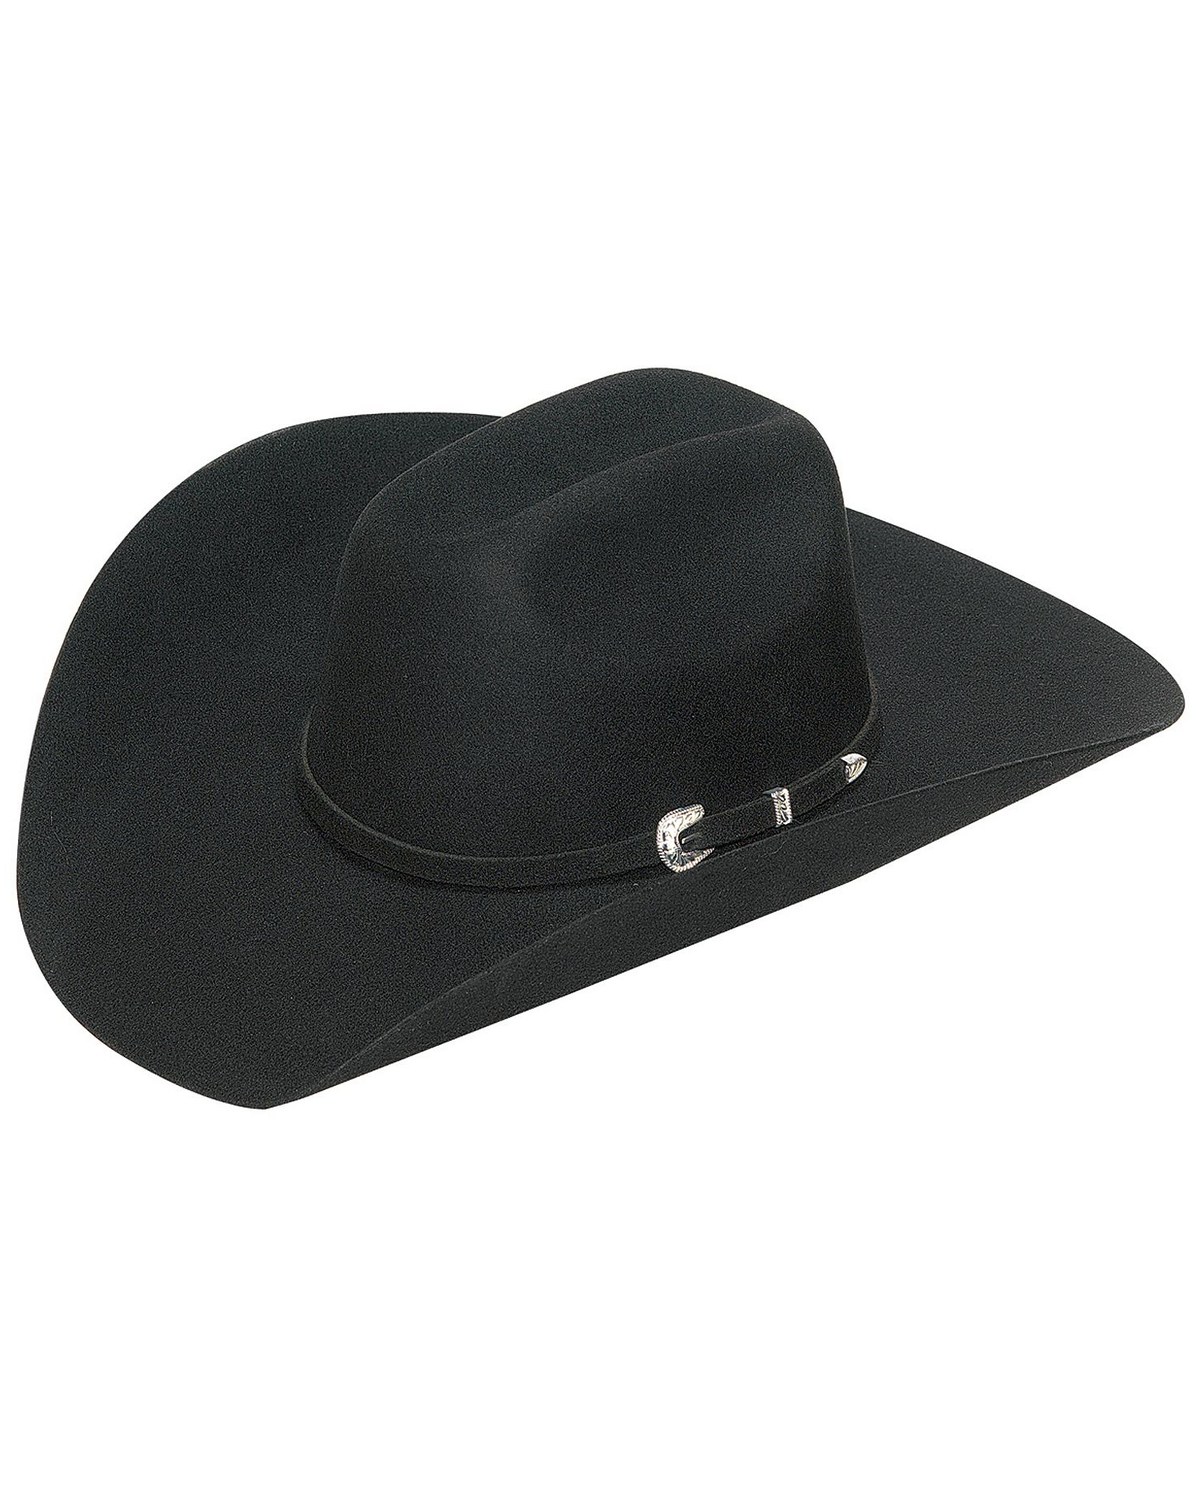 Twister Laredo Felt Cowboy Hat